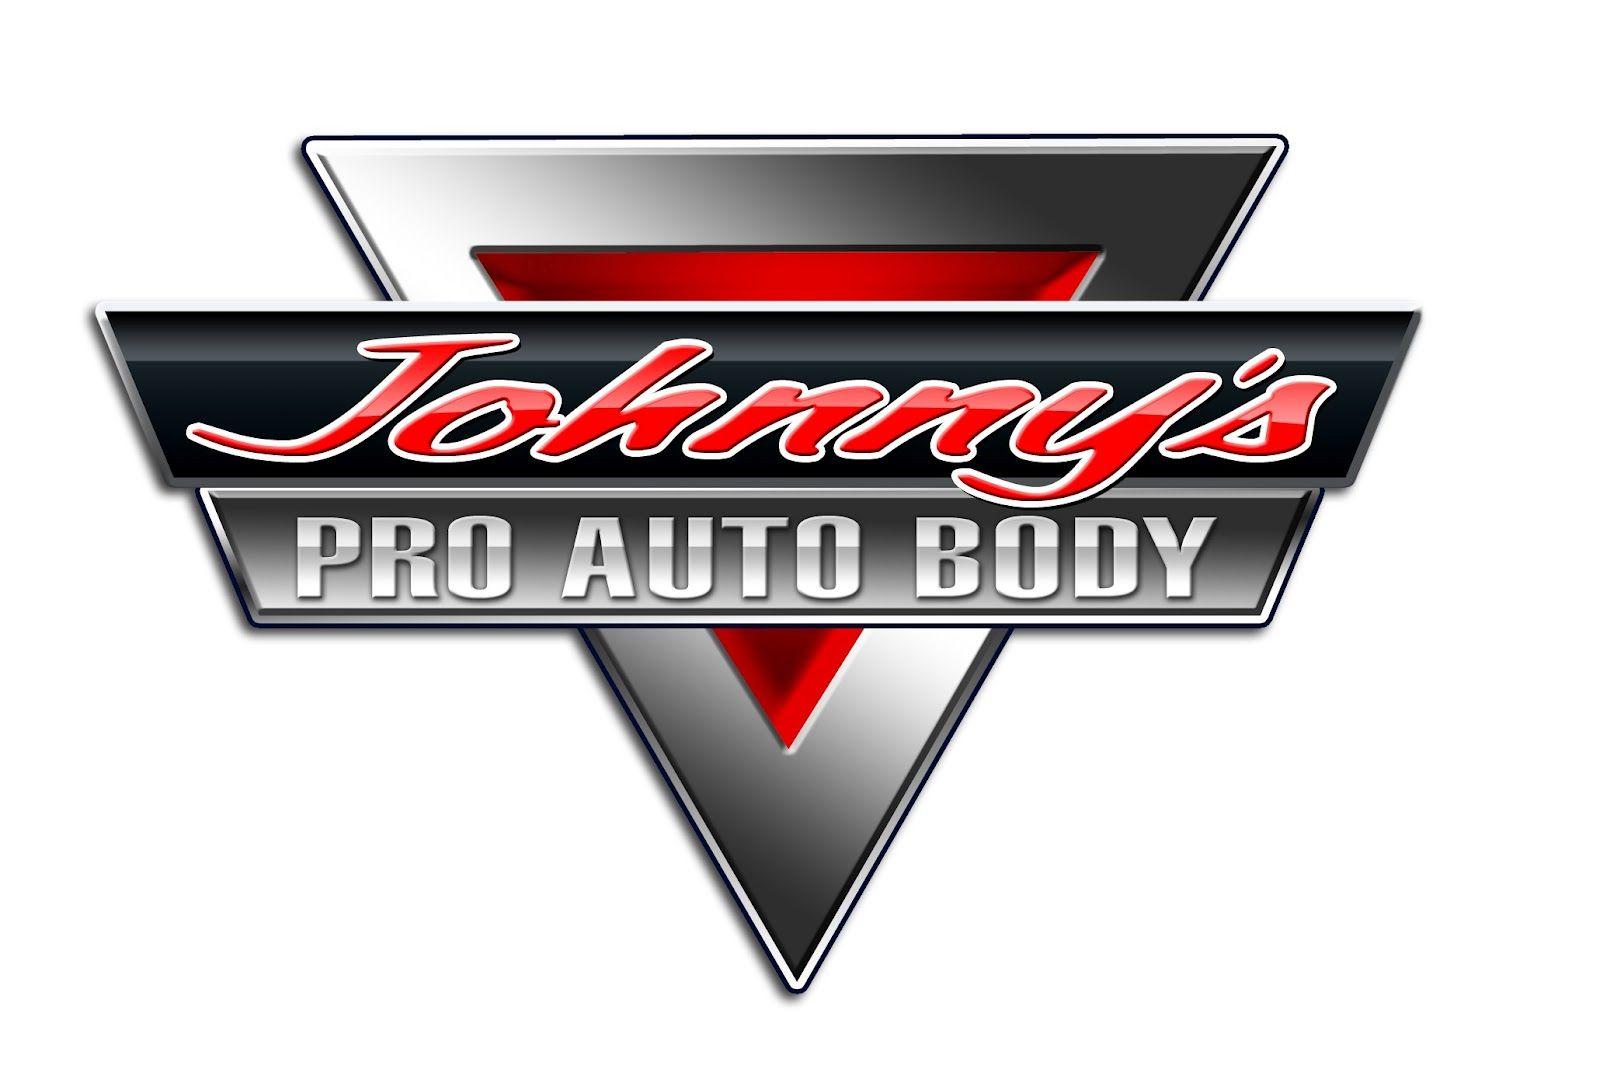 Auto Body Logo - Johnny's Pro Auto Body Logo | Johnny's Pro Auto Body